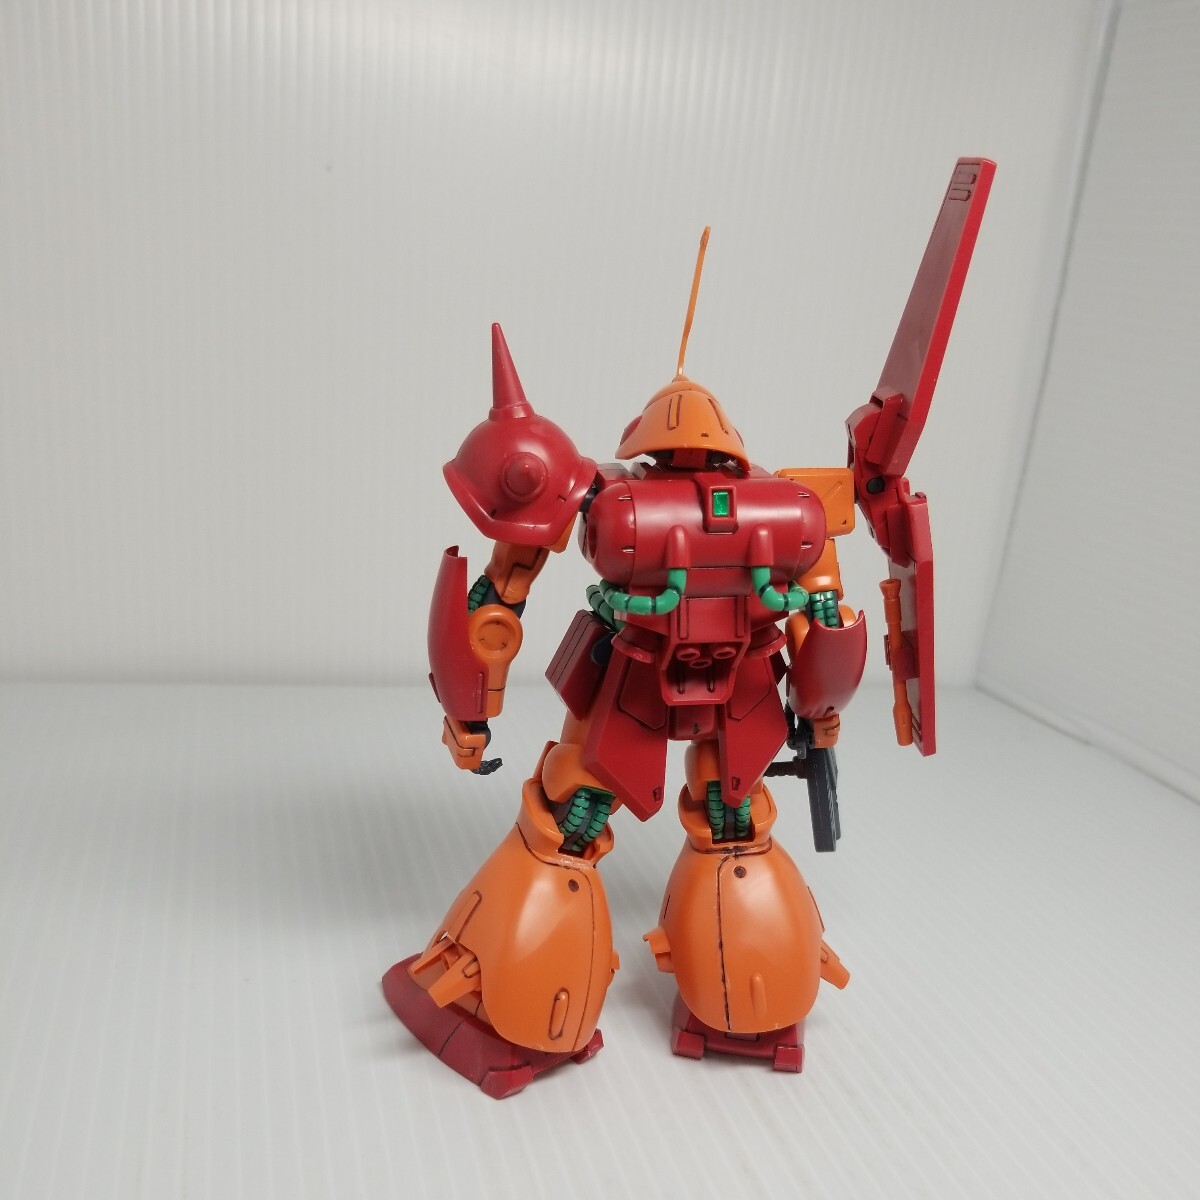 oka-90g 5/17 HGmala носорог Gundam включение в покупку возможно gun pra Junk 